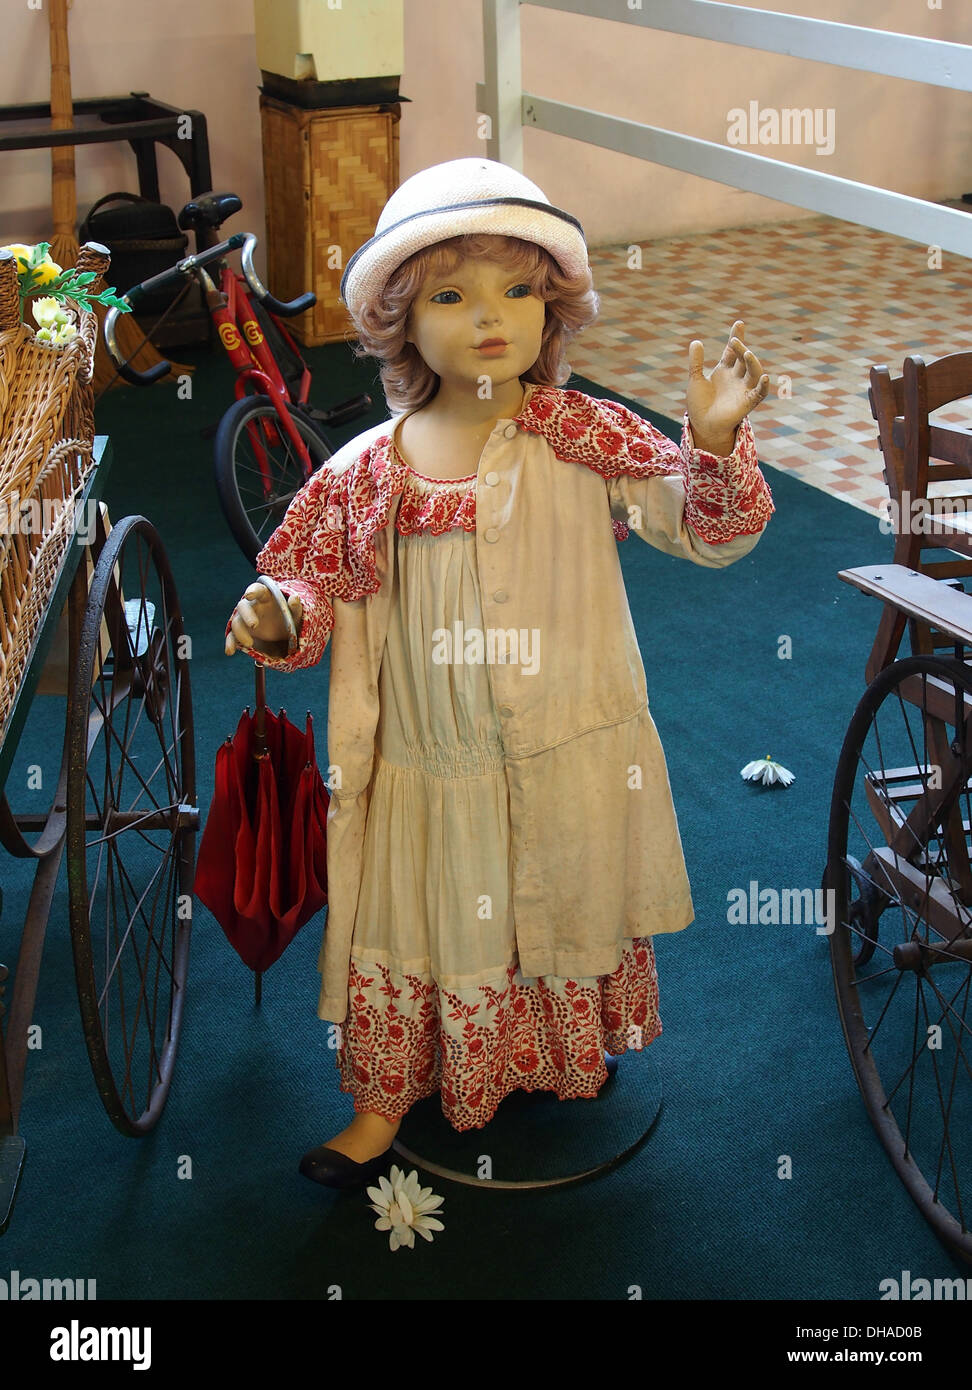 Alte Puppe-Puppe mit alten Klamotten pic3 Stockfotografie - Alamy